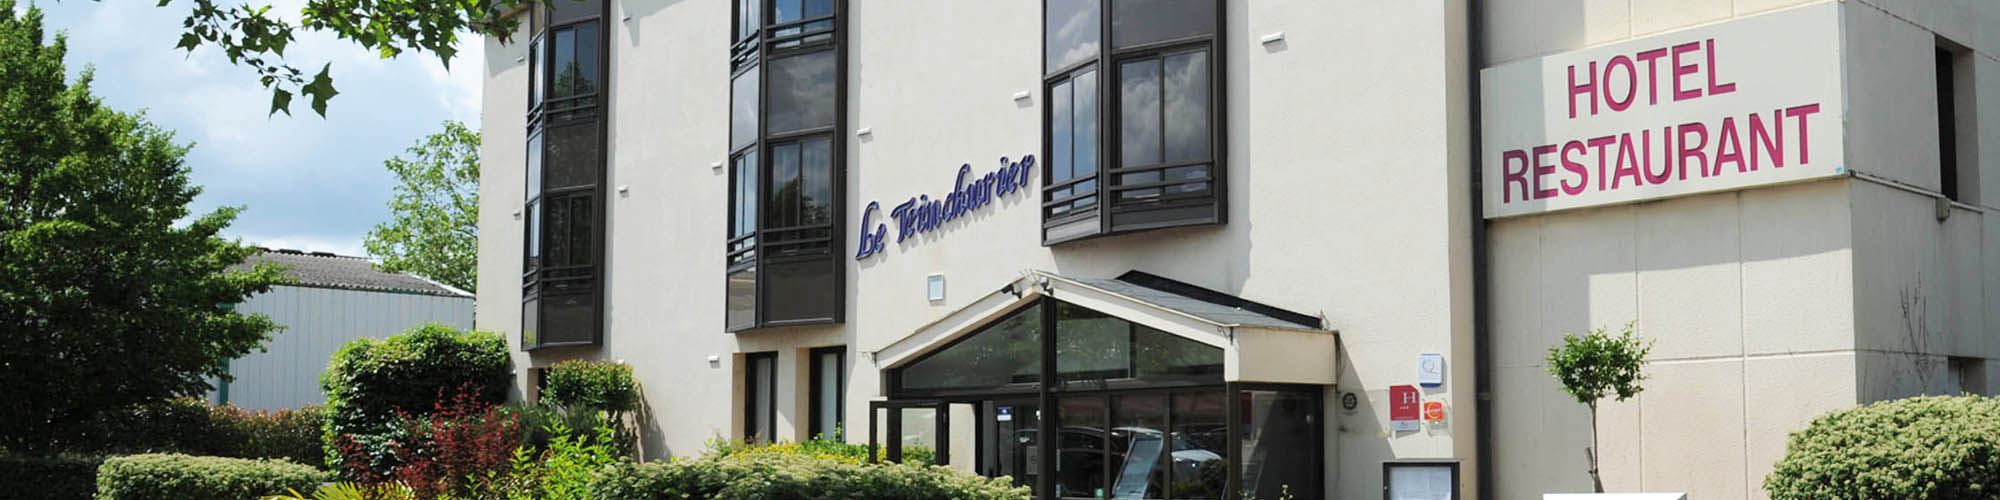 Facade de l'hôtels Brive en Corrèze